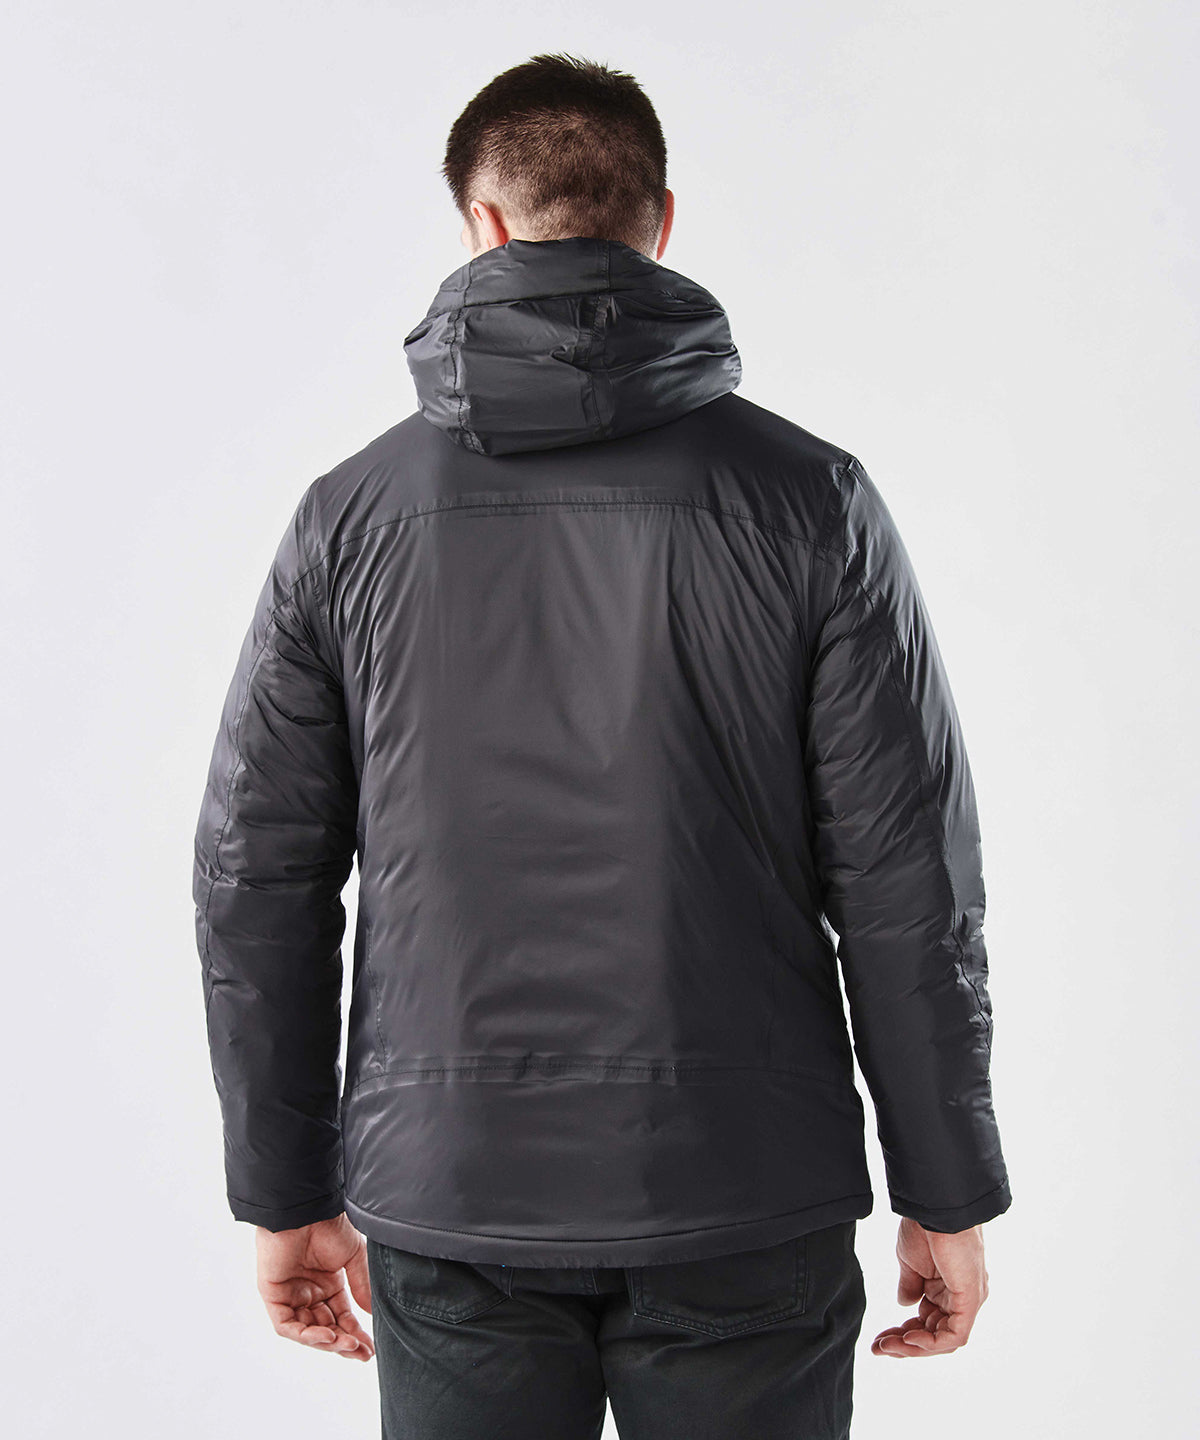 Black ice thermal jacket